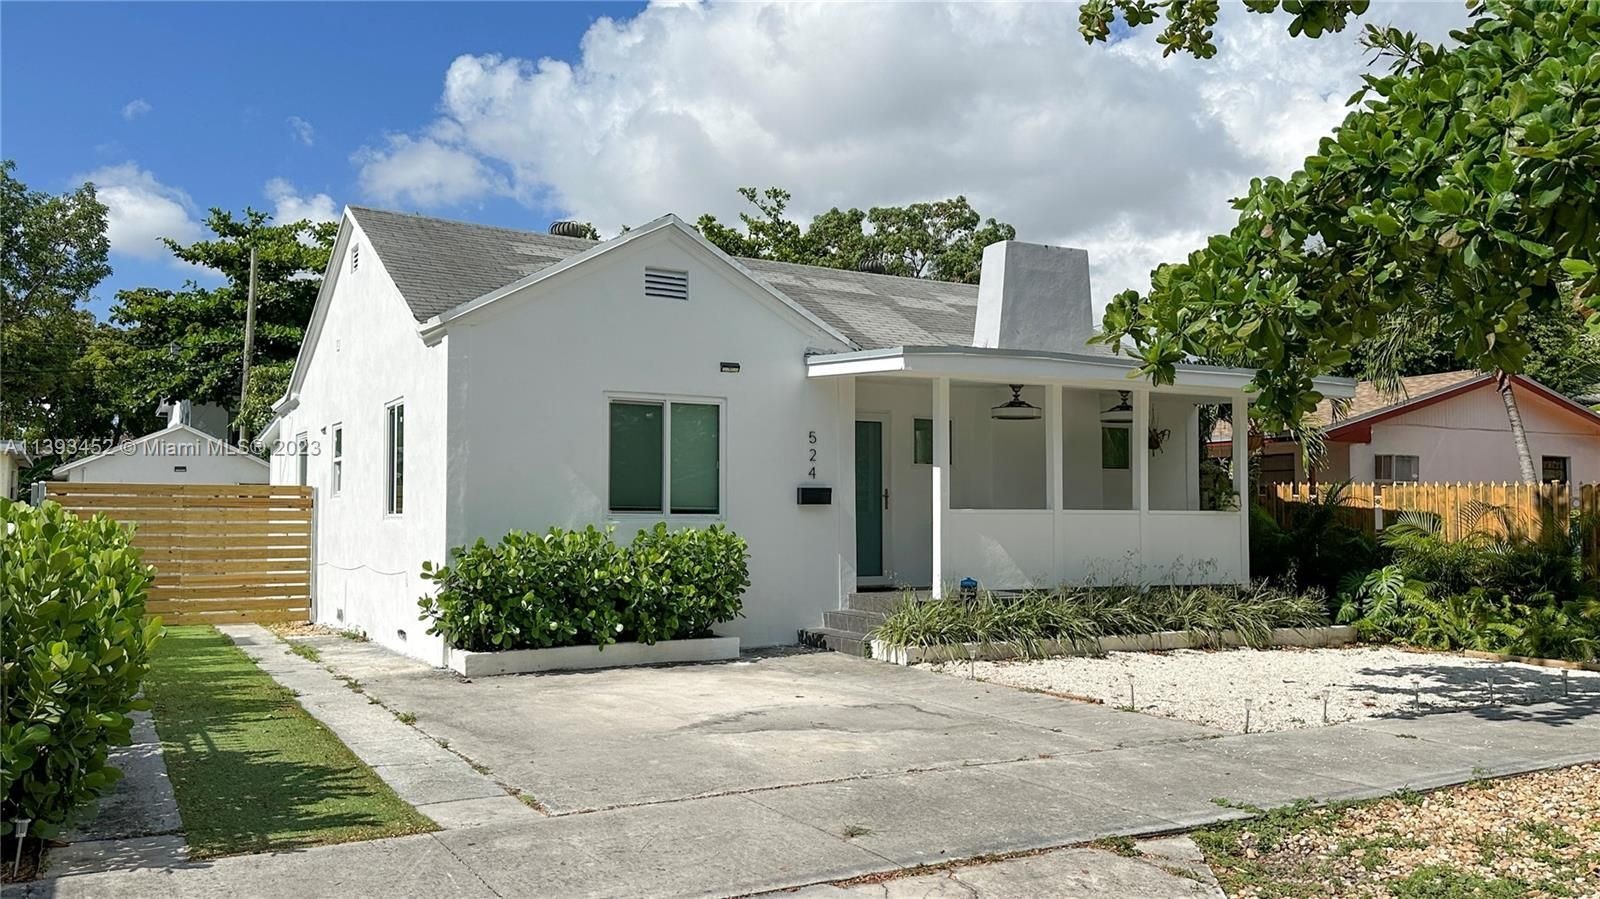 Real estate property located at 524 44th St, Miami-Dade County, Miami, FL